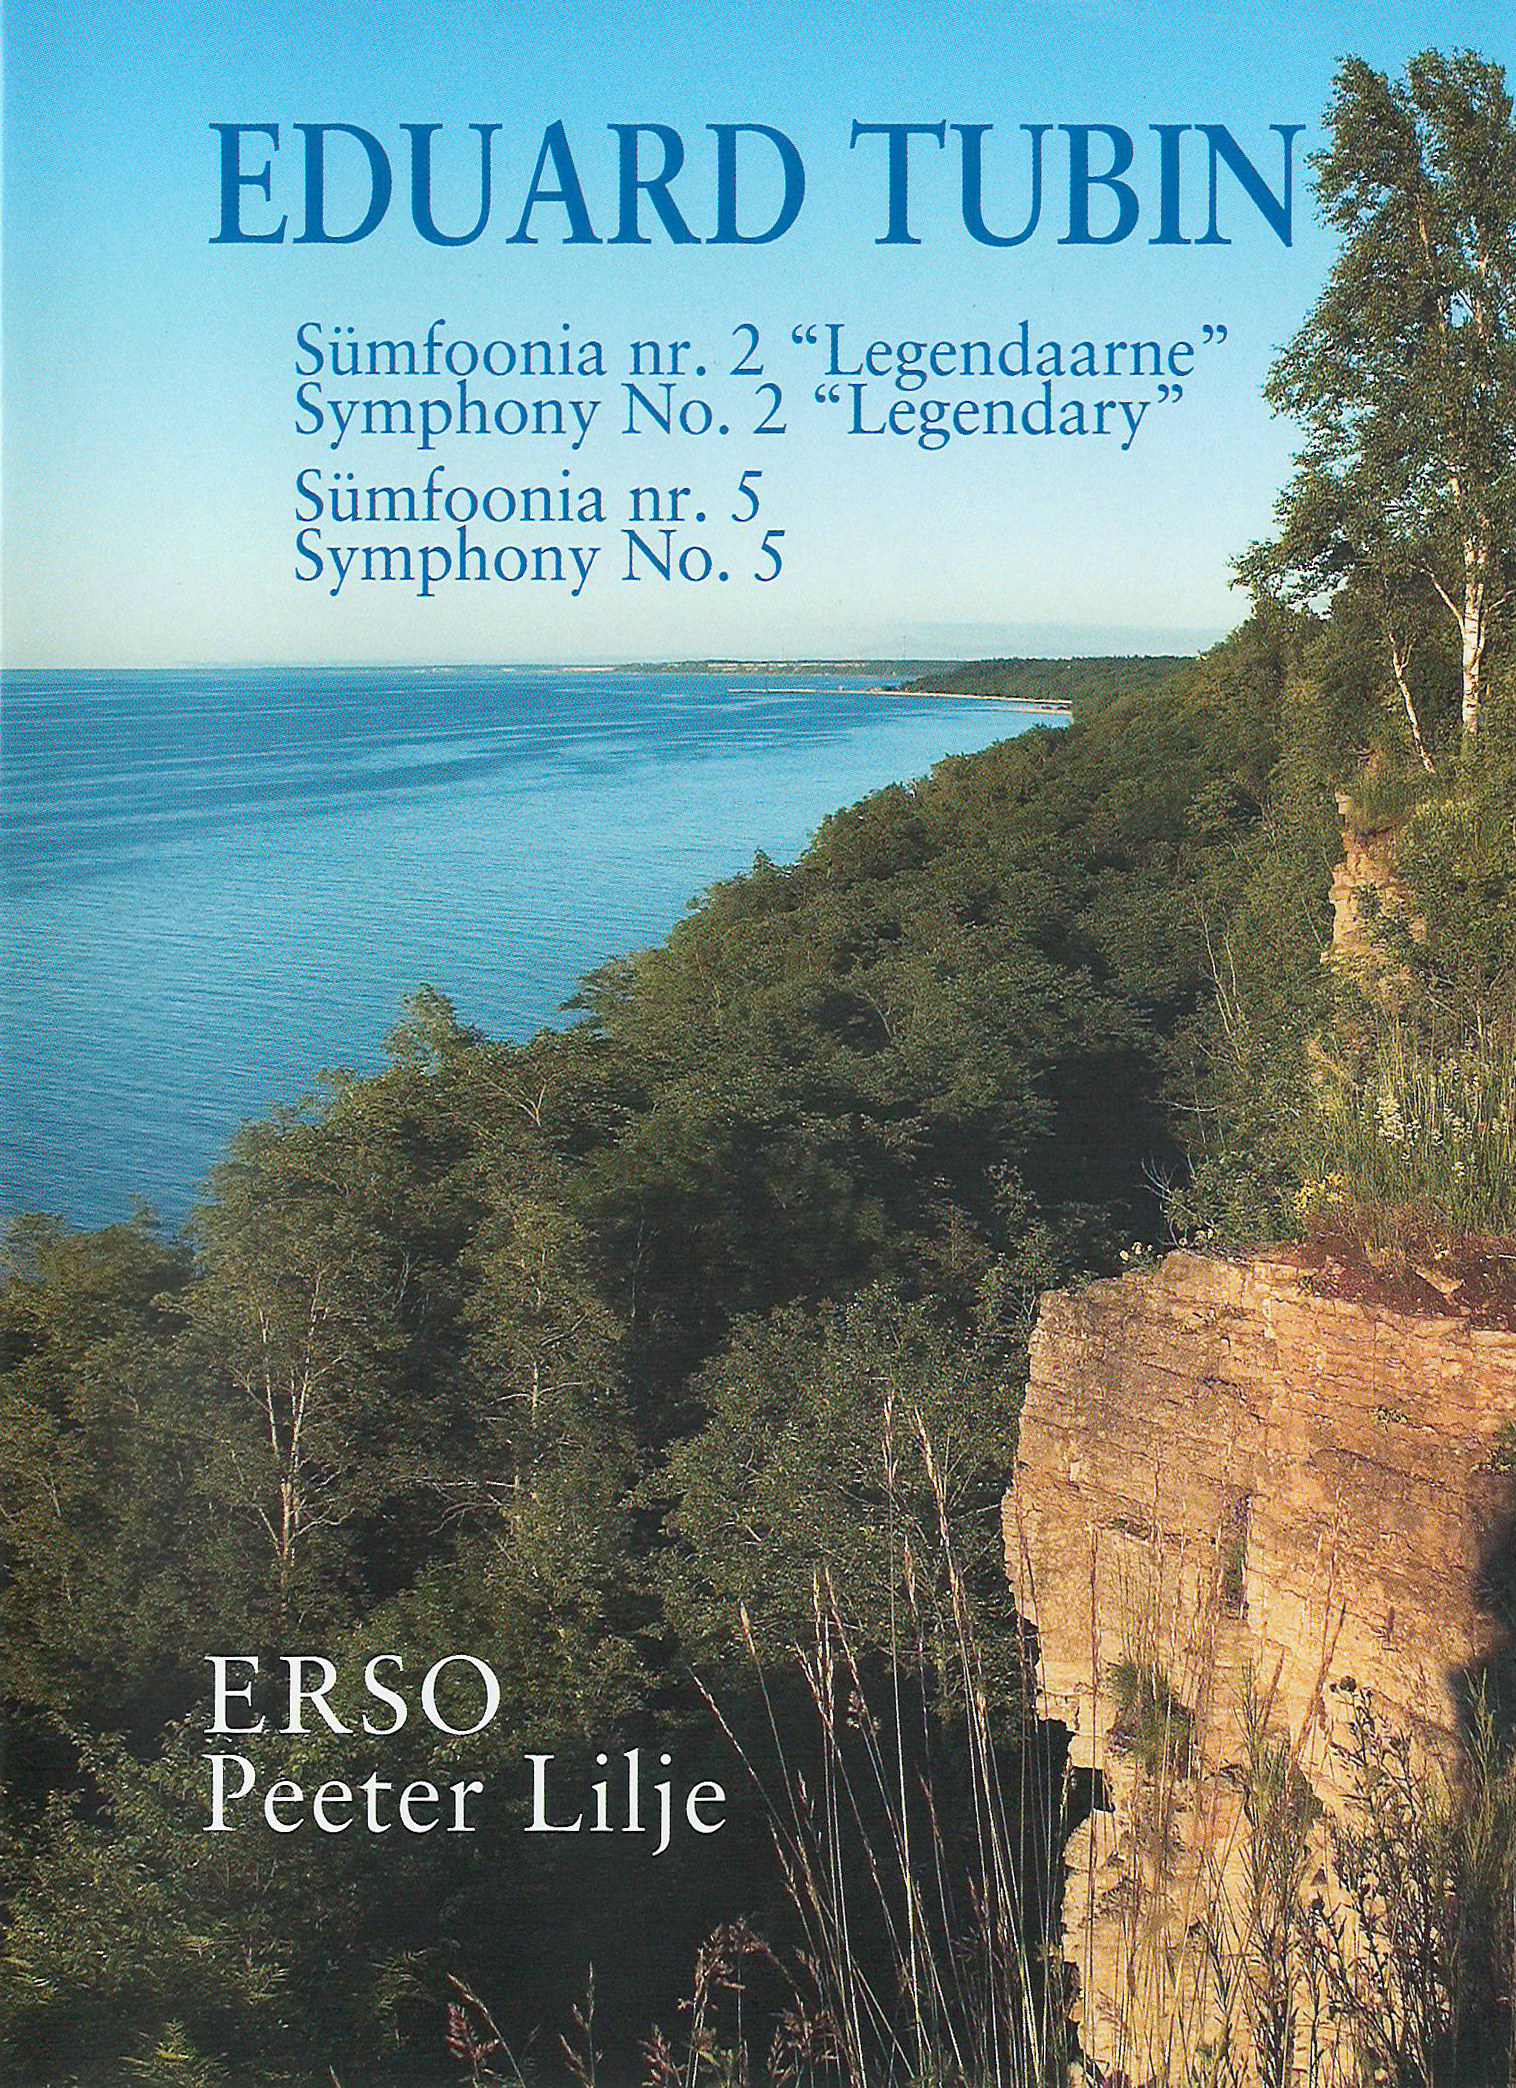 DVD: EDUARD TUBIN – Symphonies Nos 2 & 5. Peeter Lilje. International Eduard Tubin Society 2013